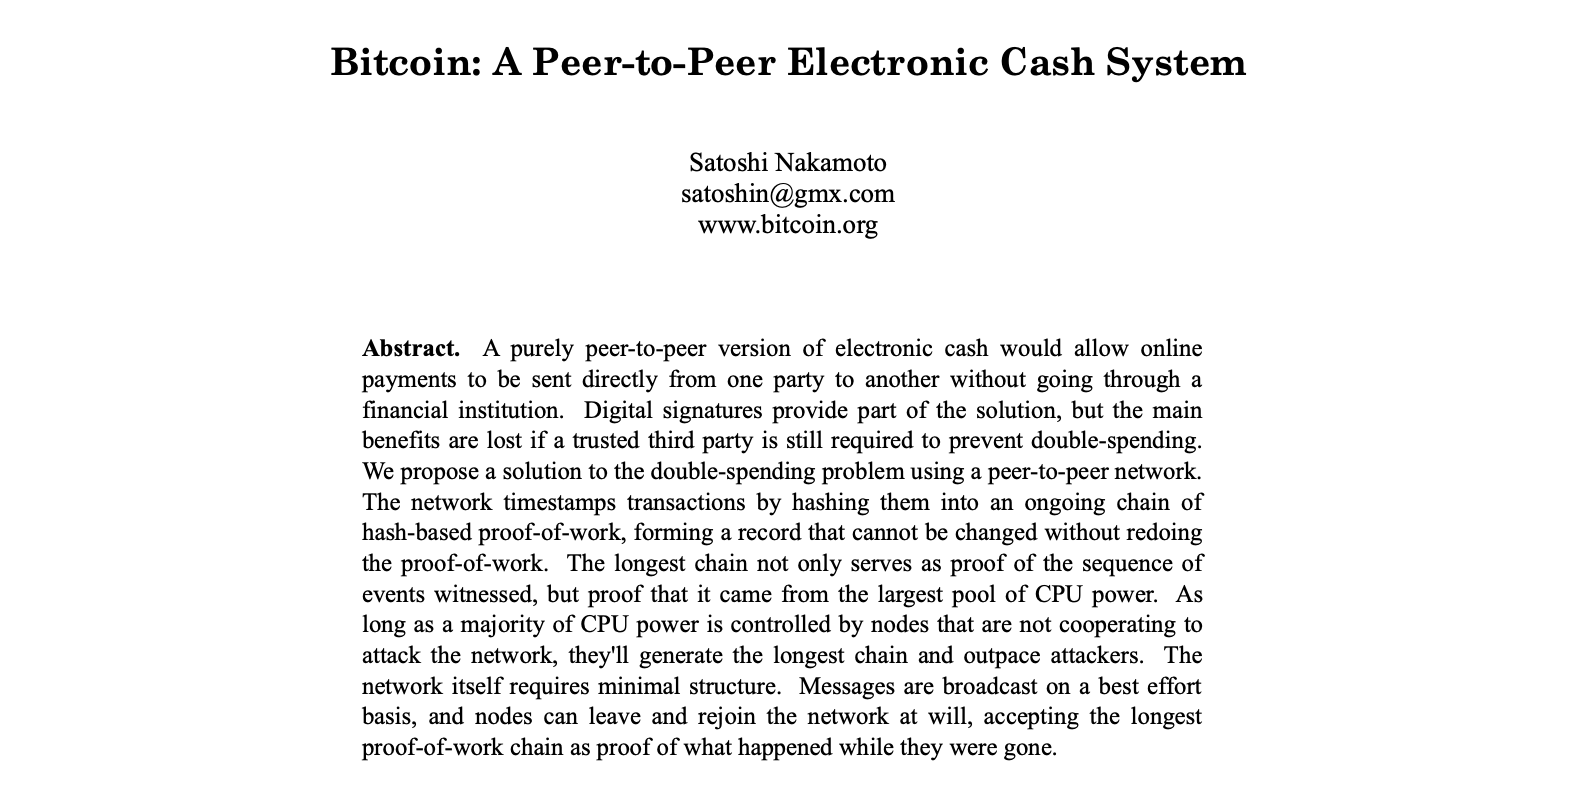 <a href="https://bitcoin.org/bitcoin.pdf">Bitcoin: A Peer-to-Peer Electronic Cash System</a>